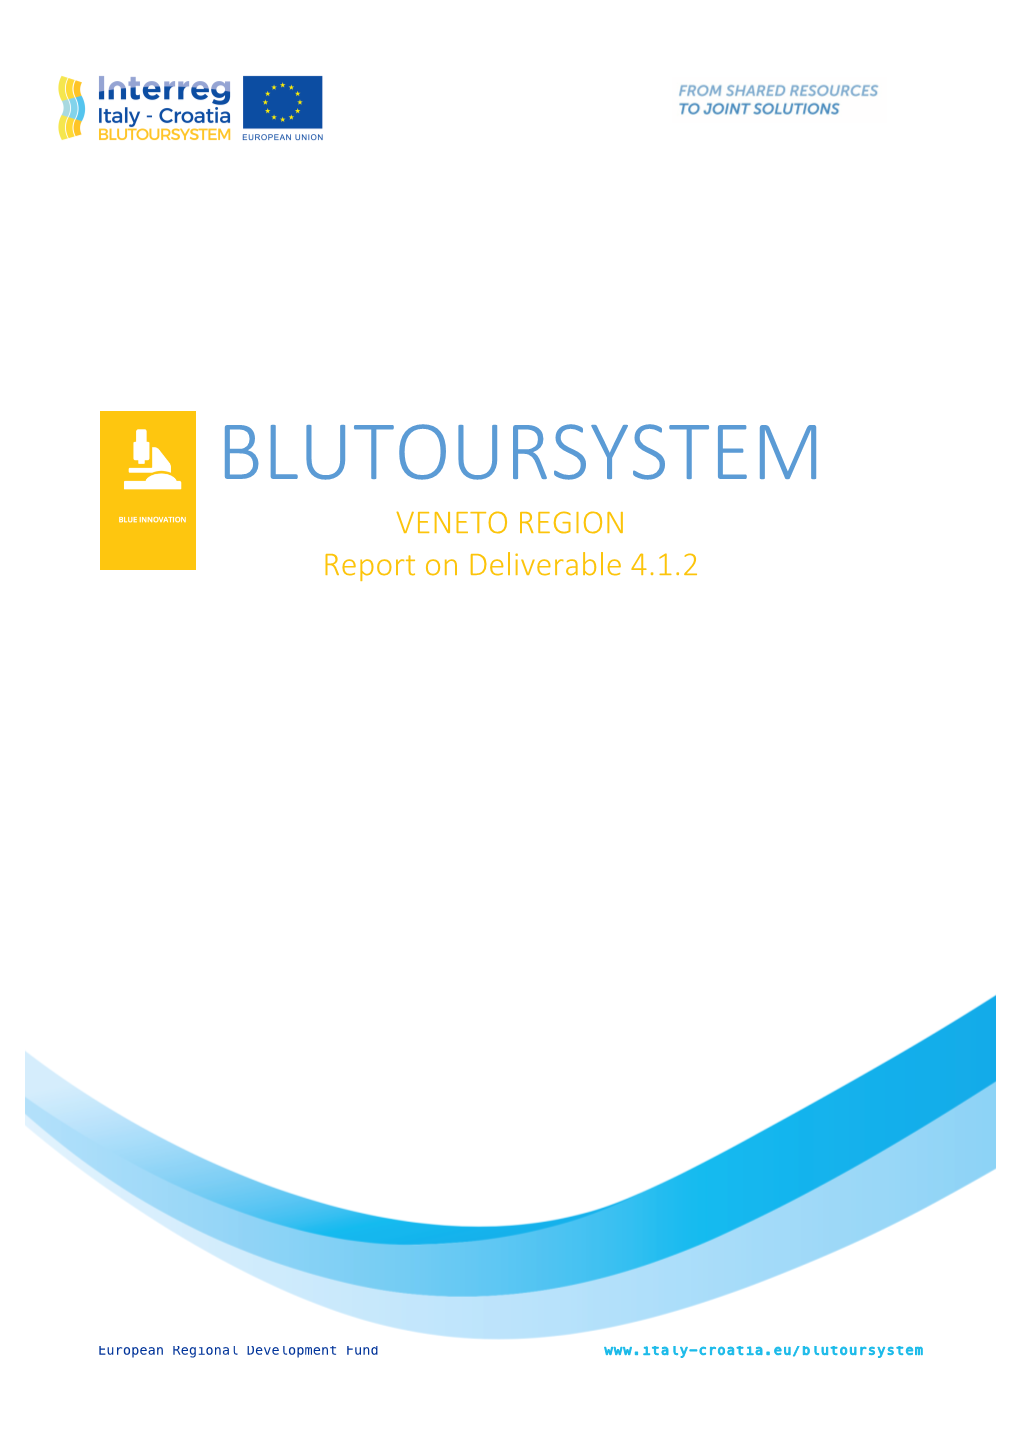 BLUTOURSYSTEM VENETO REGION Report on Deliverable 4.1.2